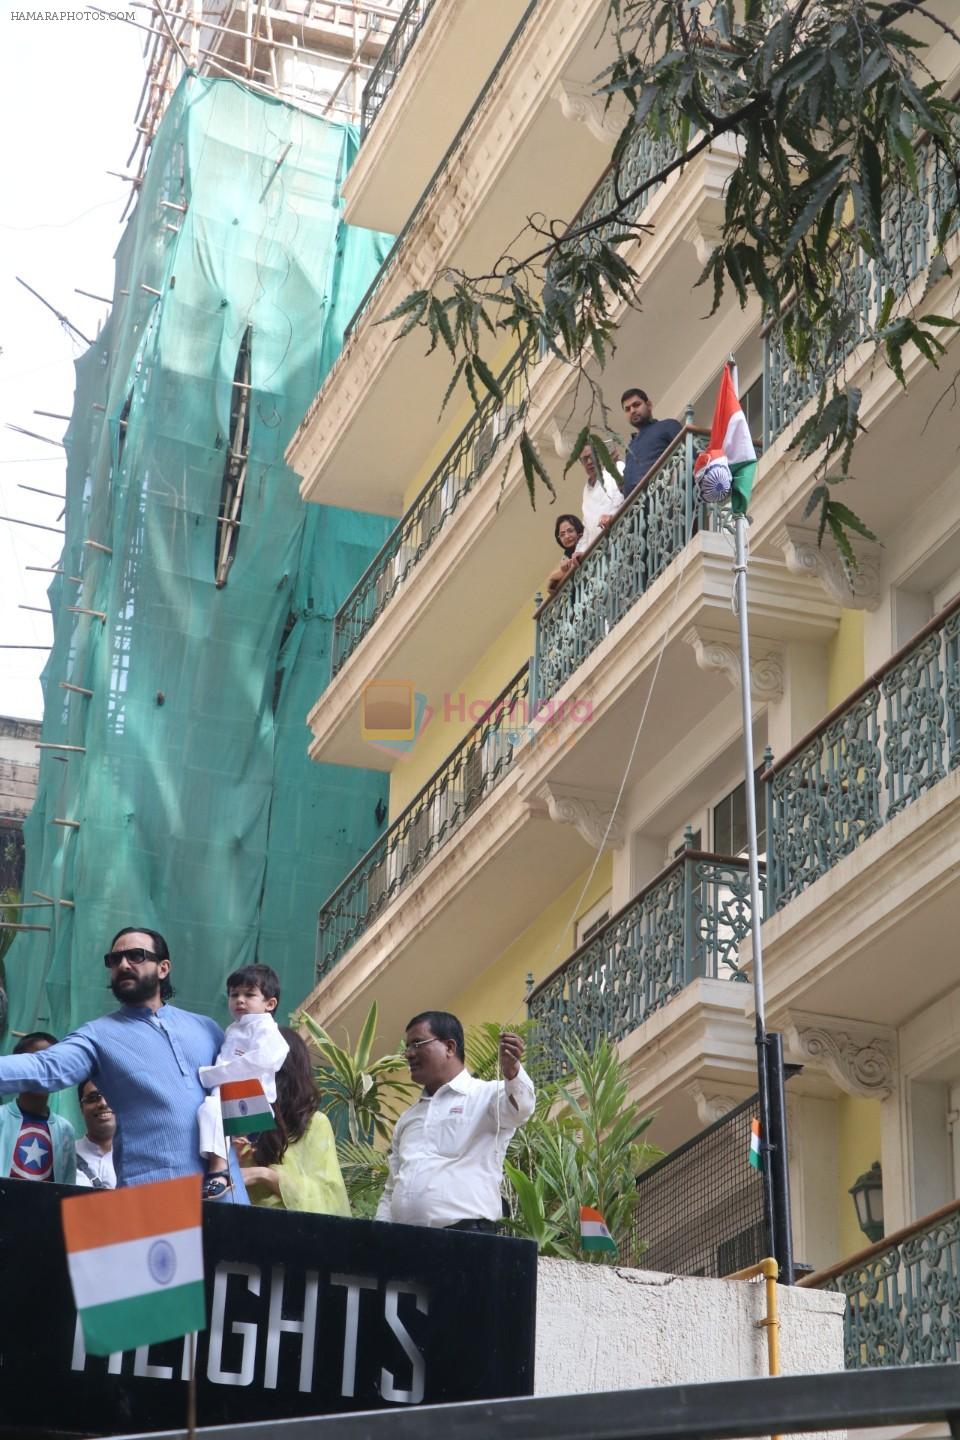 Kareena Kapoor, Saif Ali Khan & Taimur during the flag hoisting ceremony at thier society in bandra on 26th Jan 2019